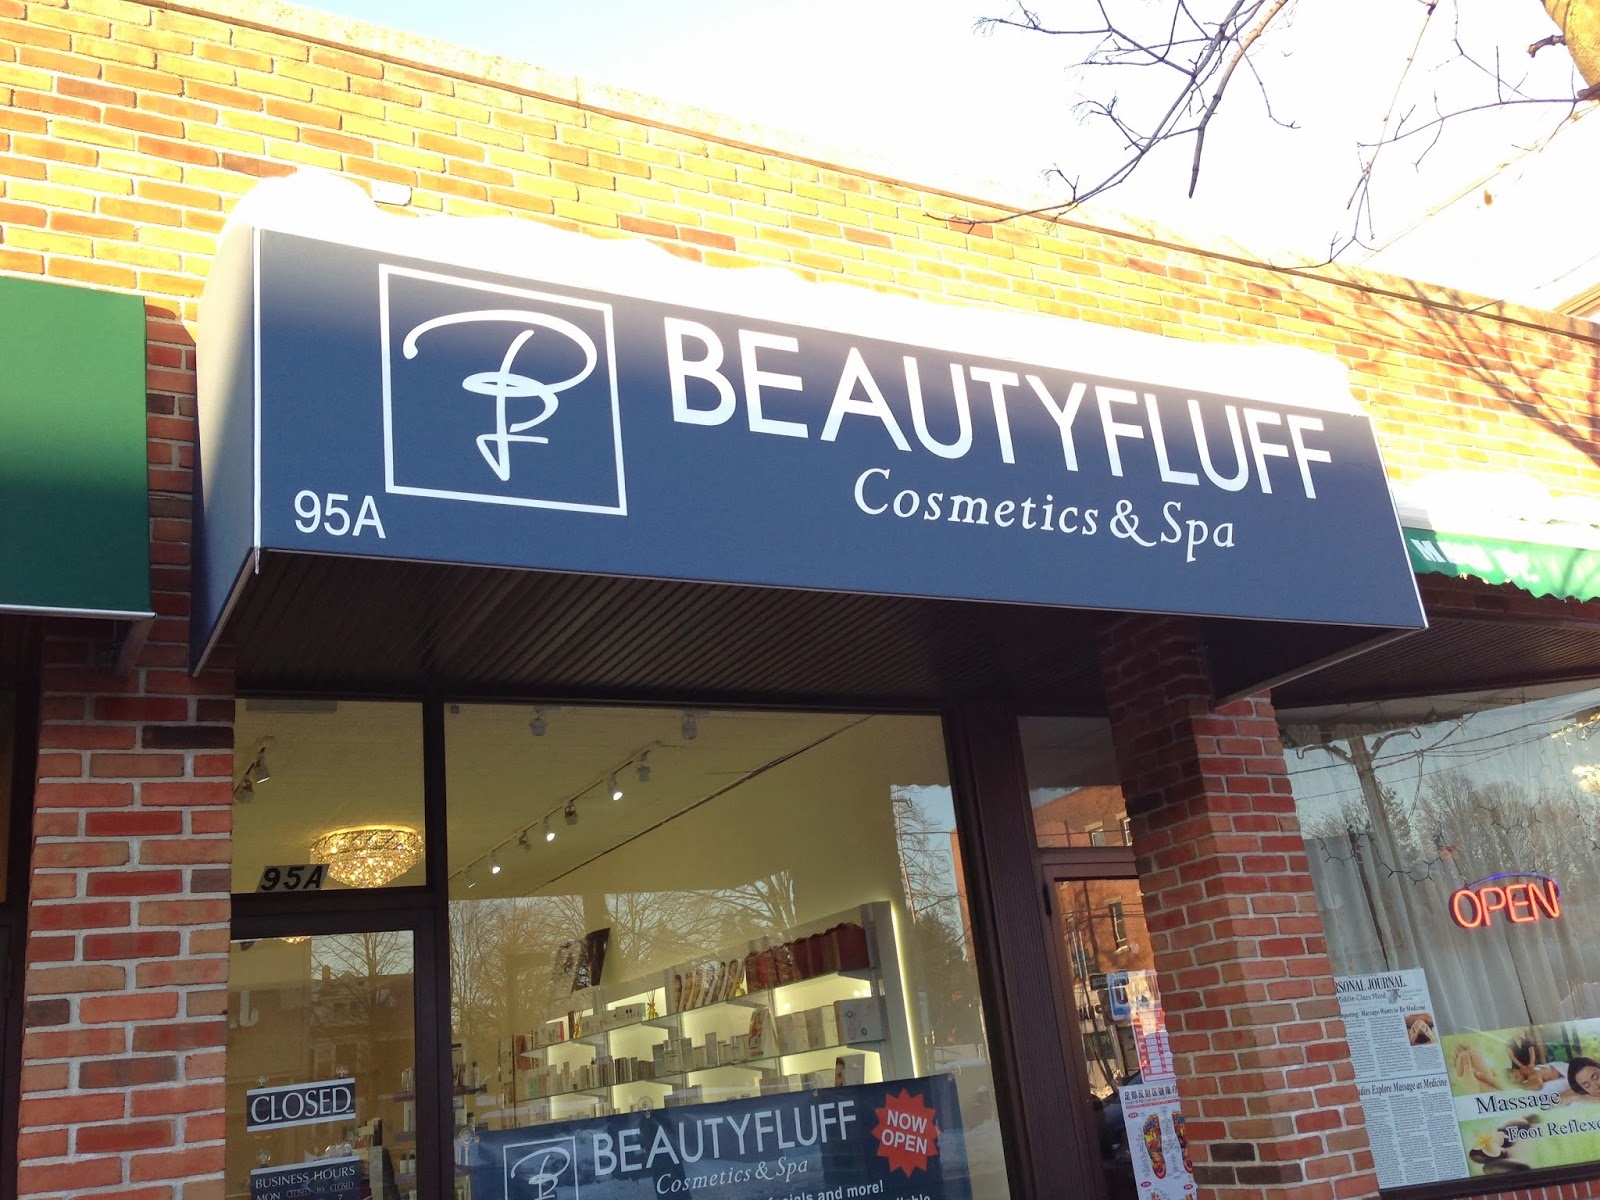 Photo of Beautyfluff Cosmetics & Spa in Port Washington City, New York, United States - 1 Picture of Point of interest, Establishment, Store, Health, Spa, Beauty salon